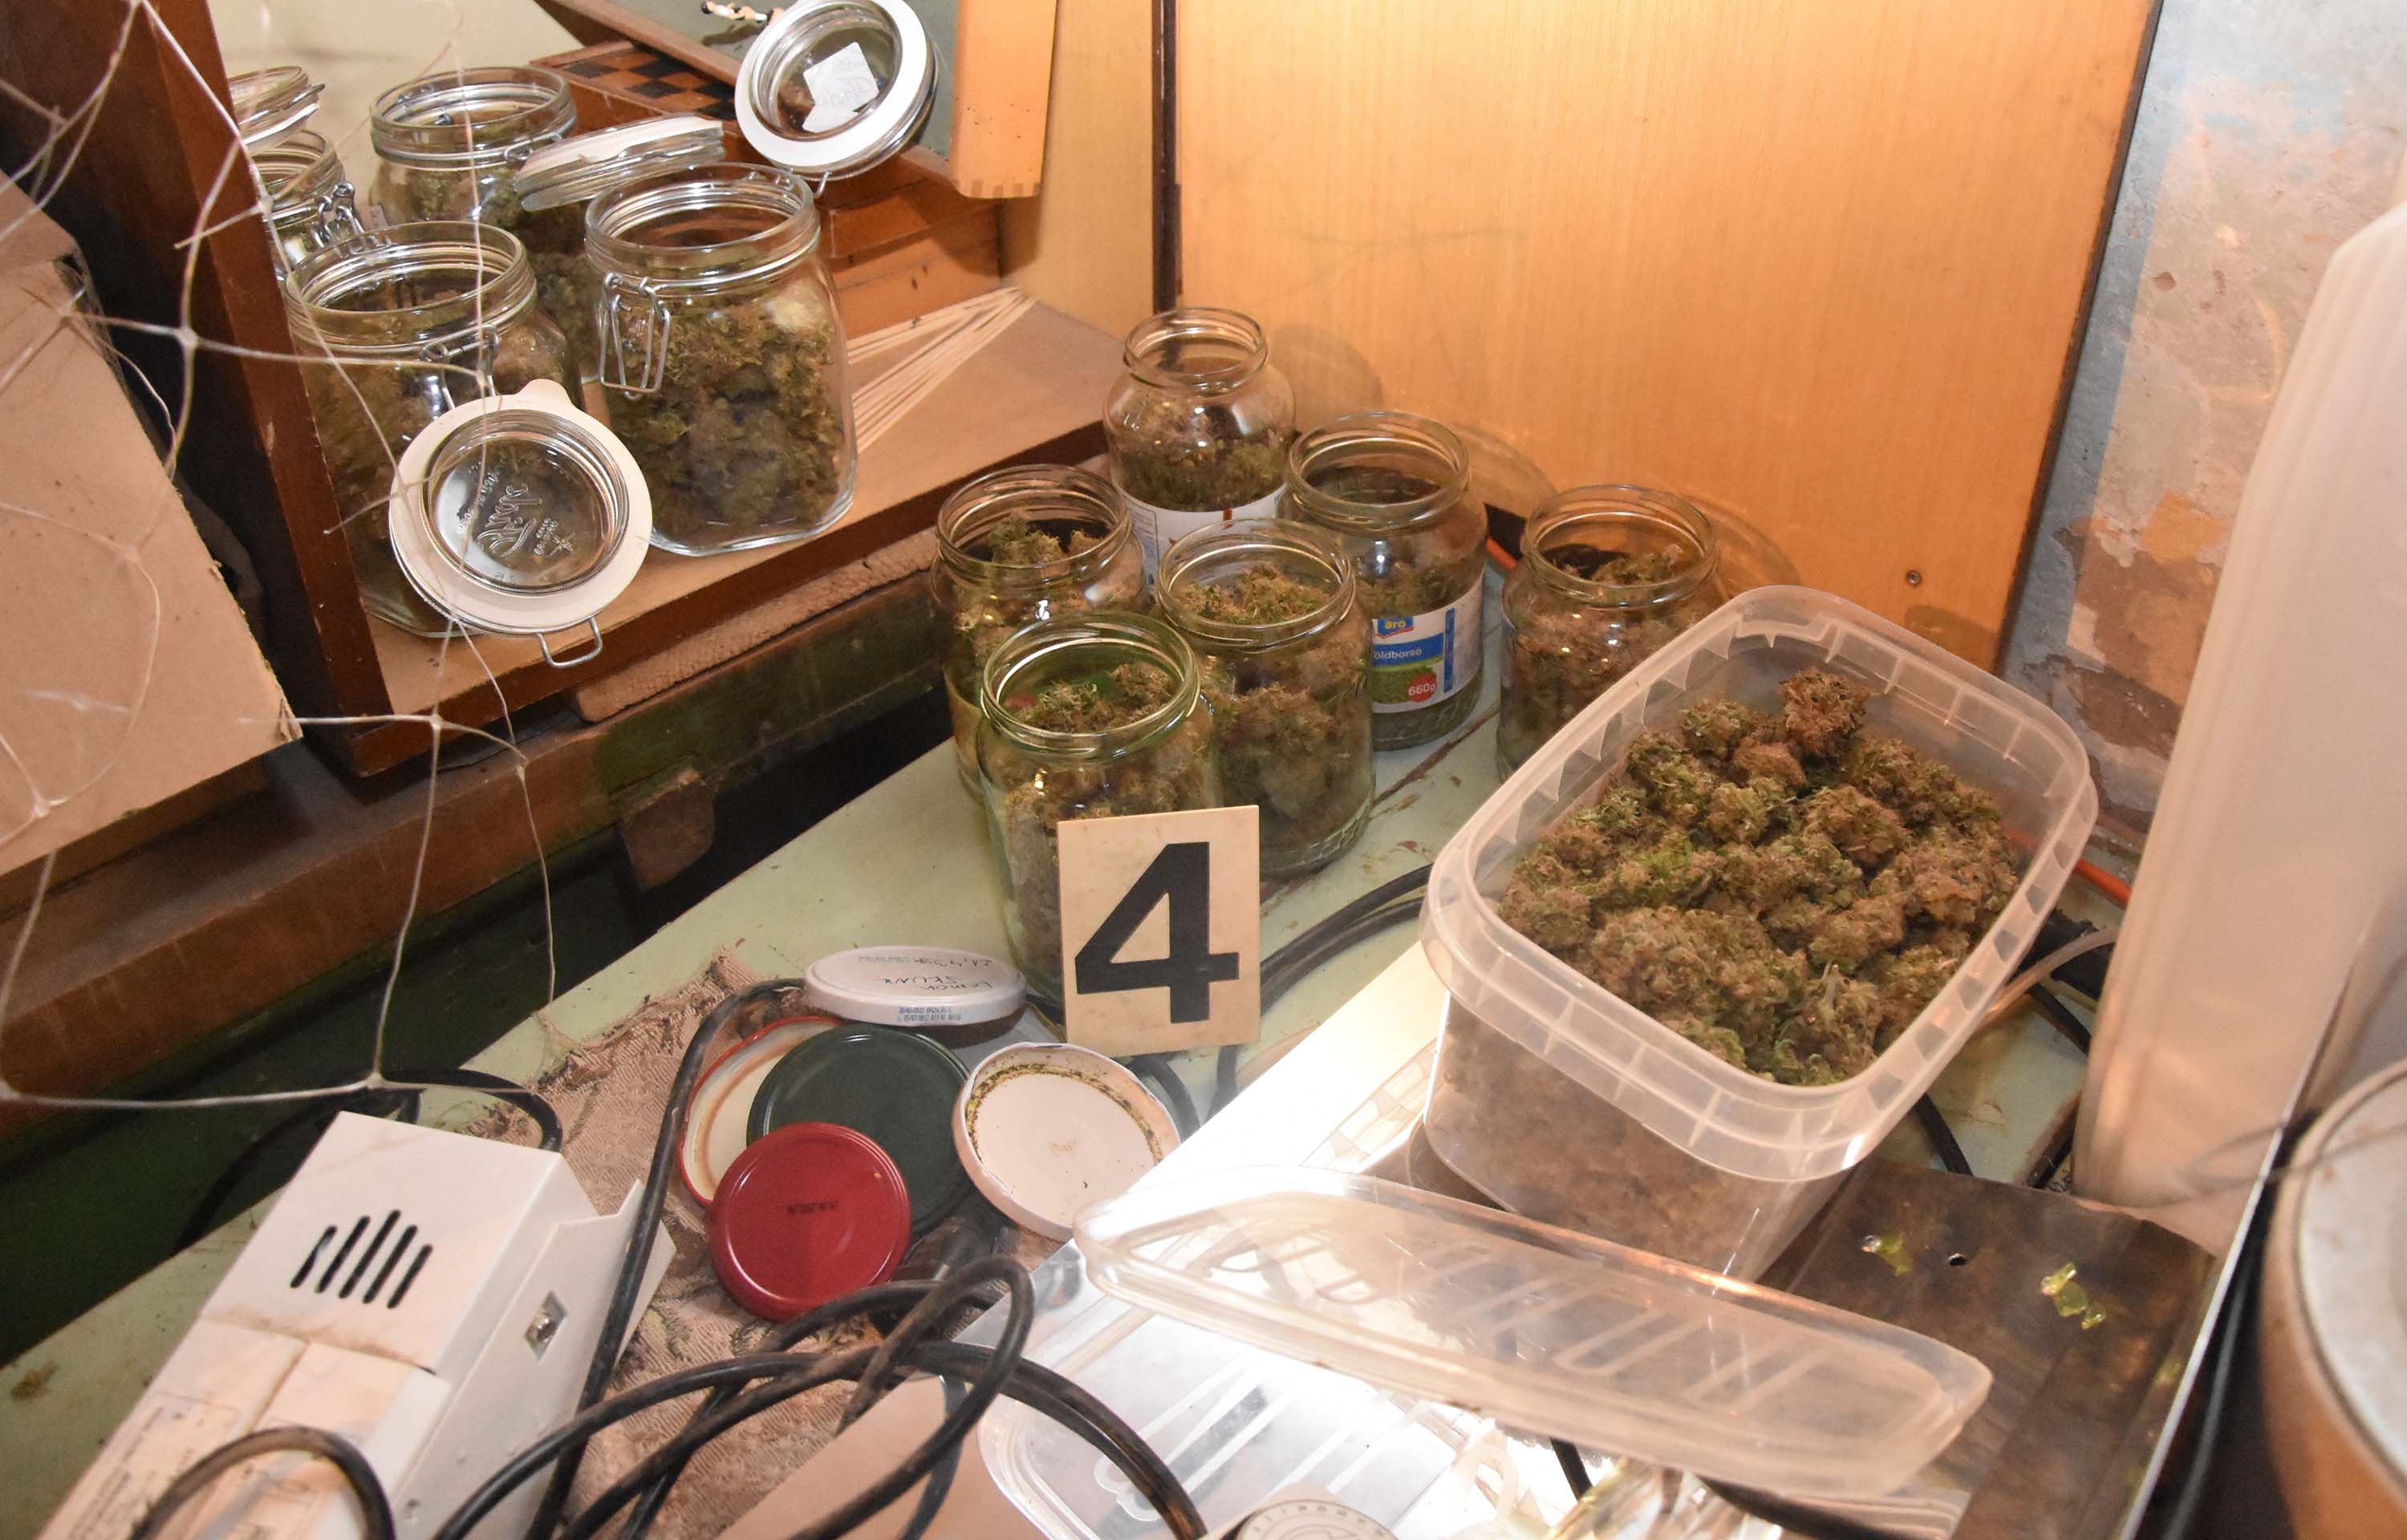 Zaplenjeno sedam kilograma marihuane